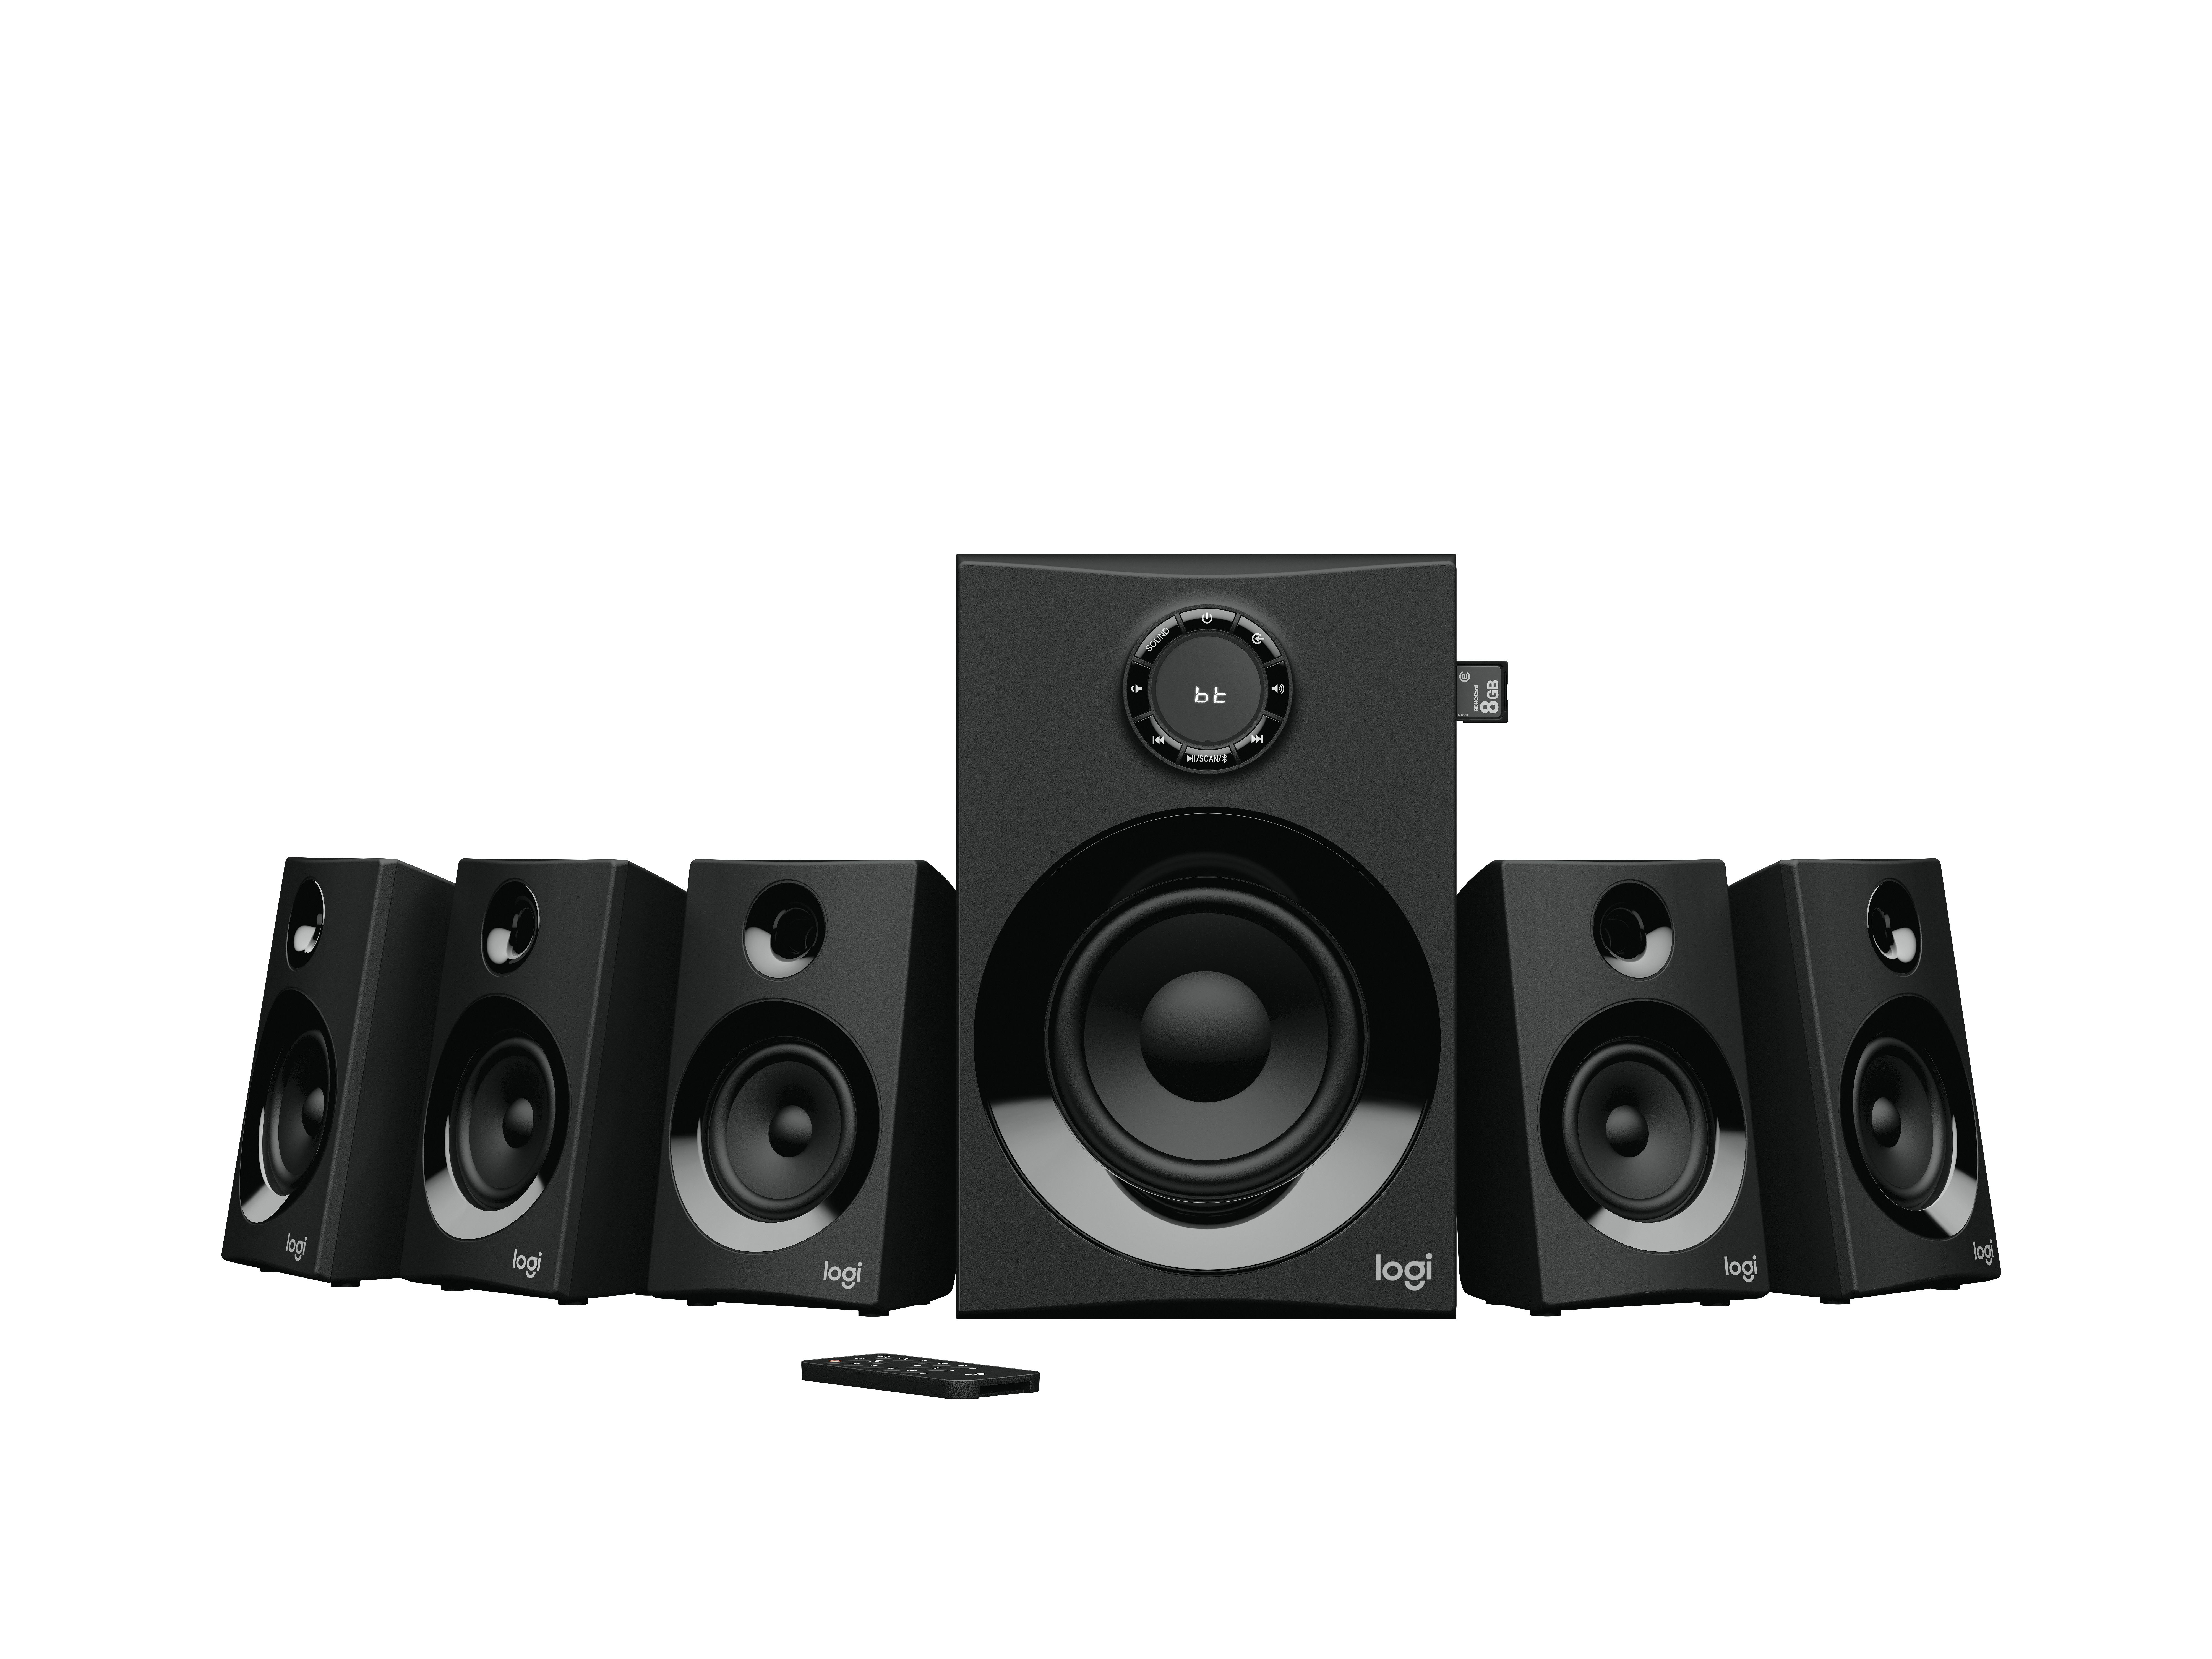 Okkernoot Jabeth Wilson Belachelijk Logitech Z607 5.1 Surround Sound Speaker System Online Bestellen / Kopen  Codima